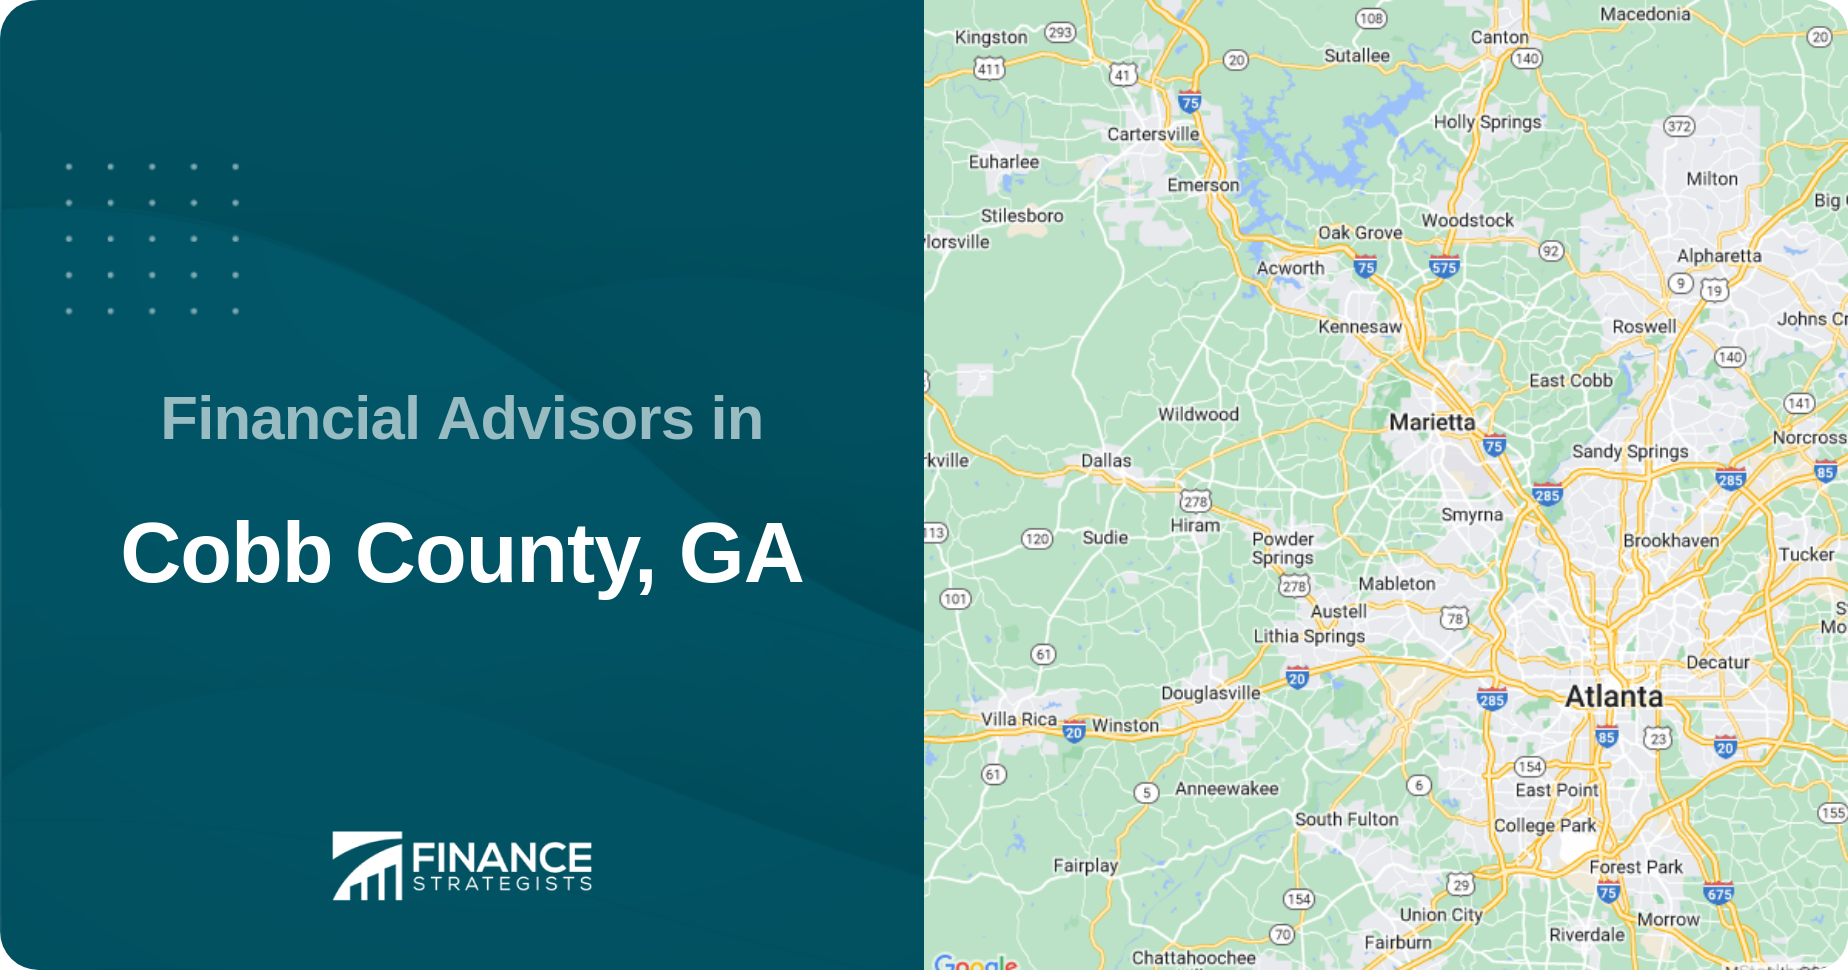 Financial Advisors in Cobb County, GA